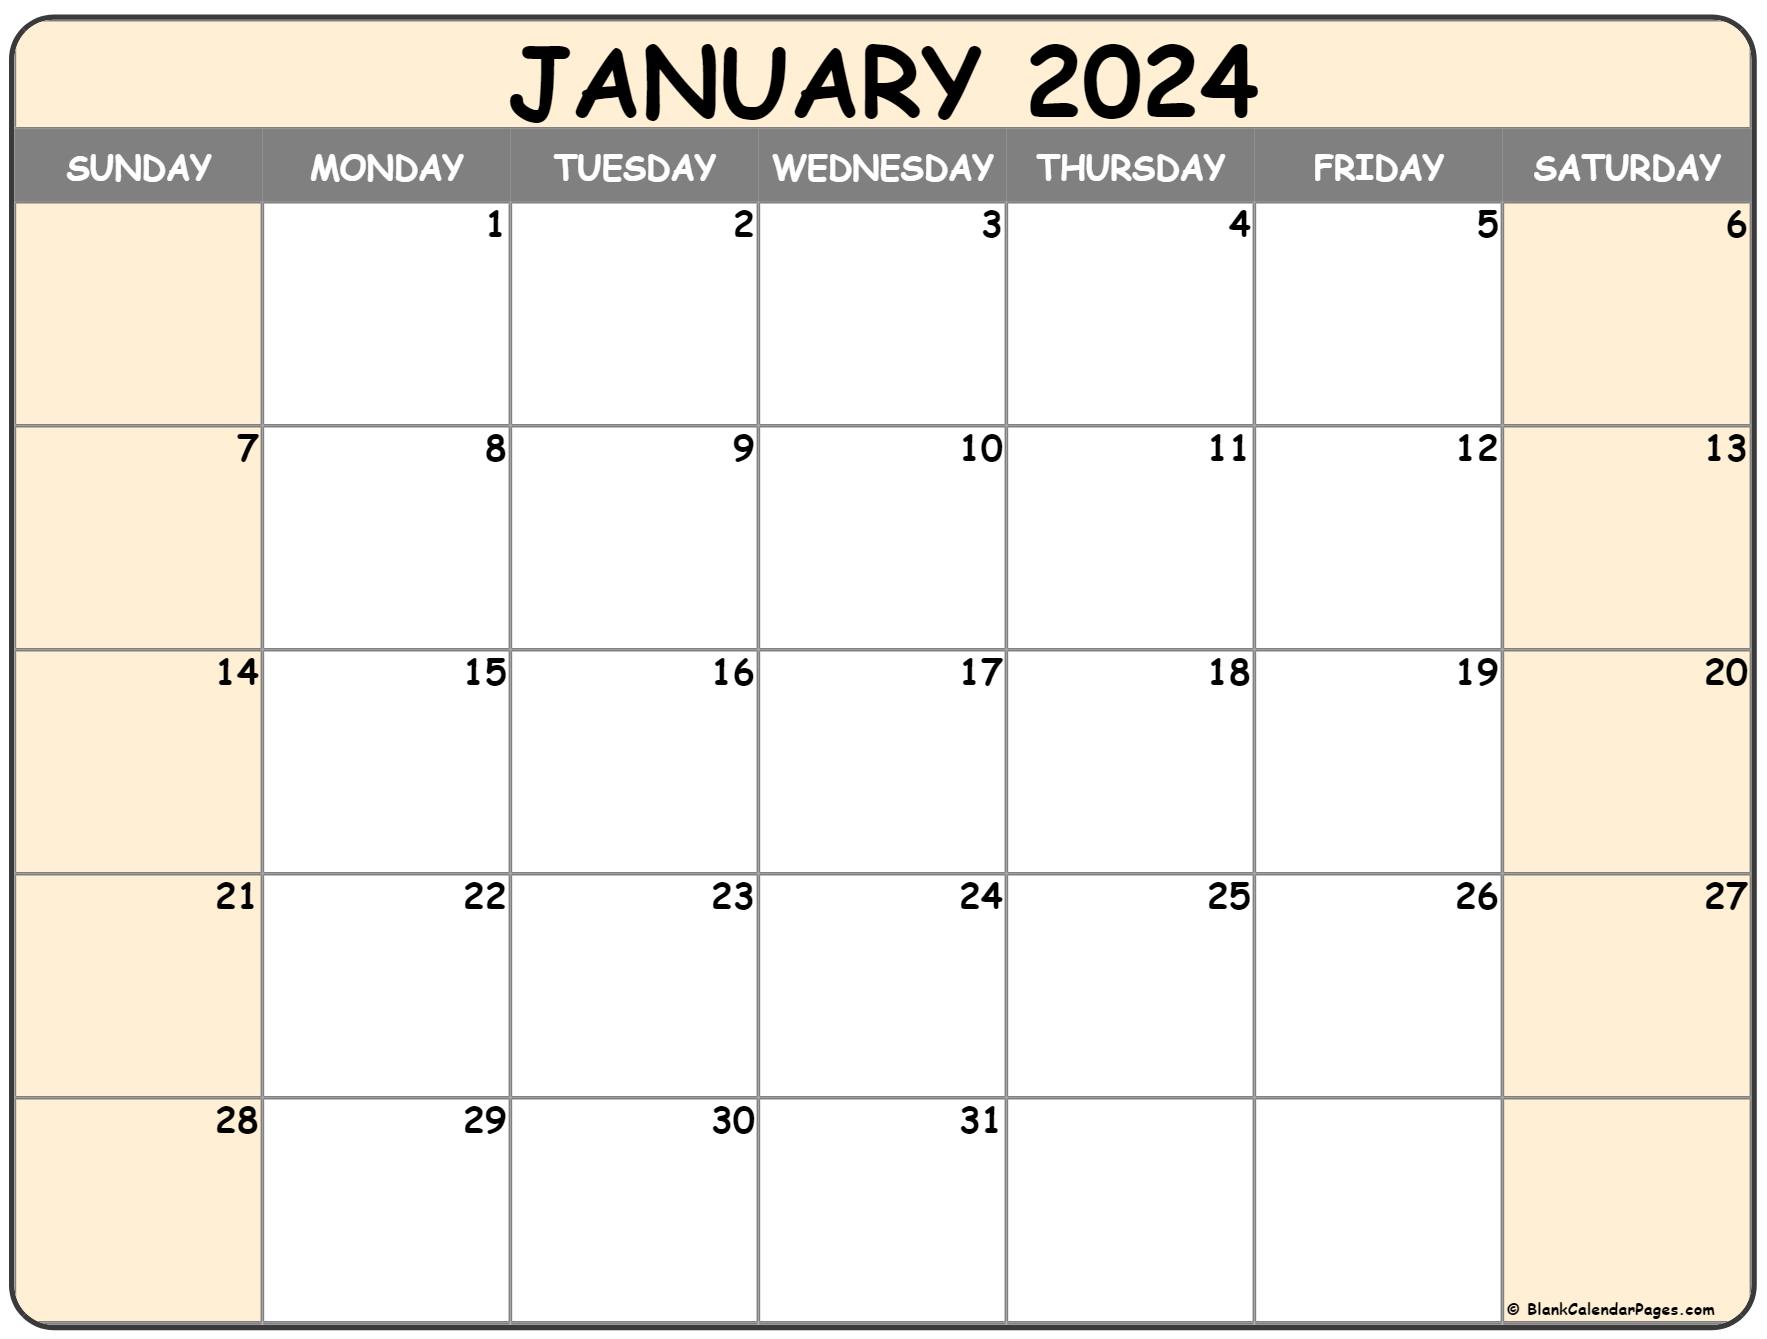 free-january-2024-calendar-pdf-best-latest-review-of-january-2024-calendar-blank